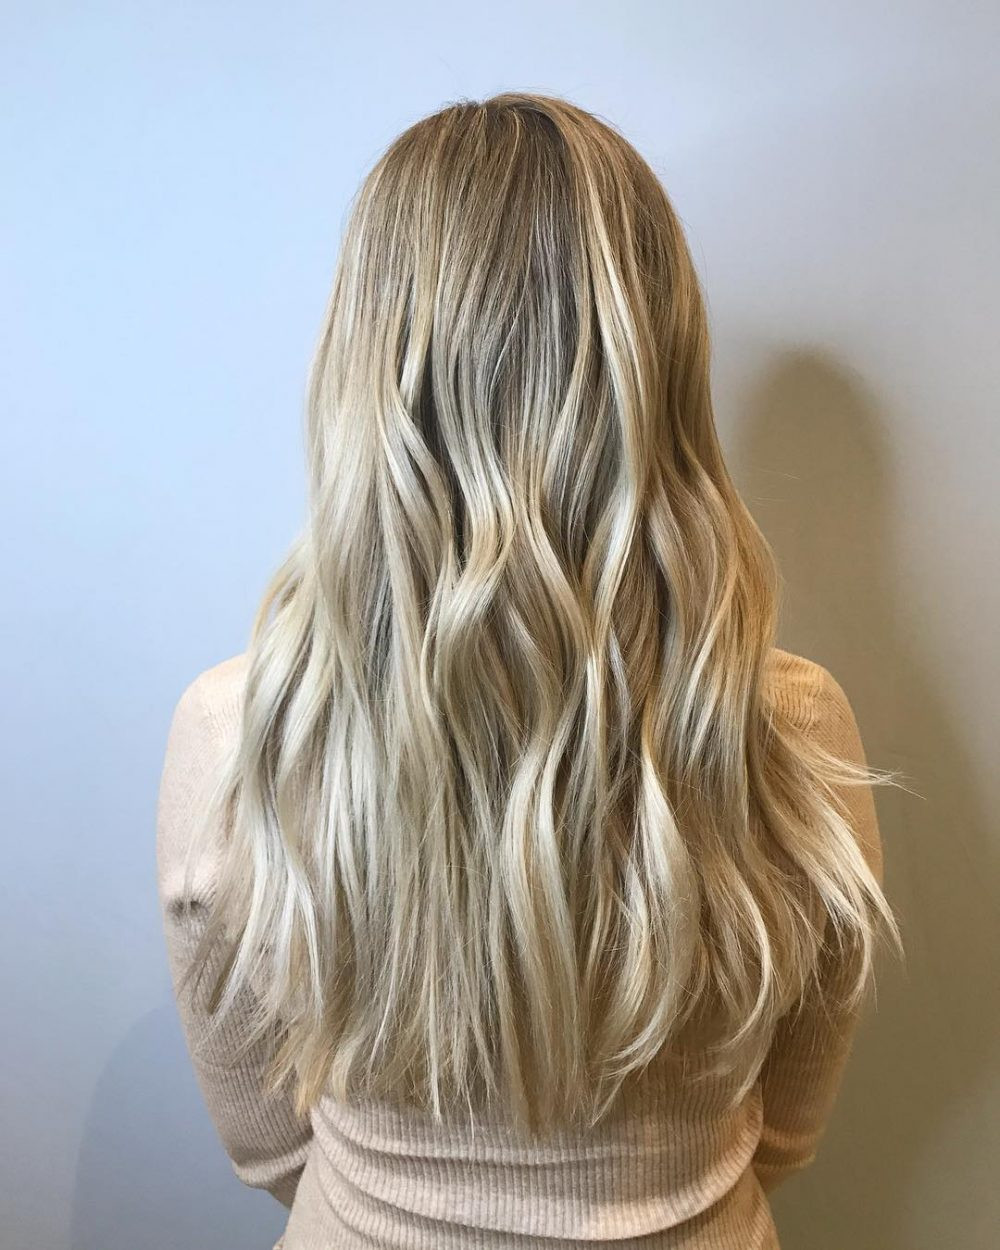 Long Blonde Hairstyles
 Top 30 Hairstyles for Long Blonde Hair in 2020